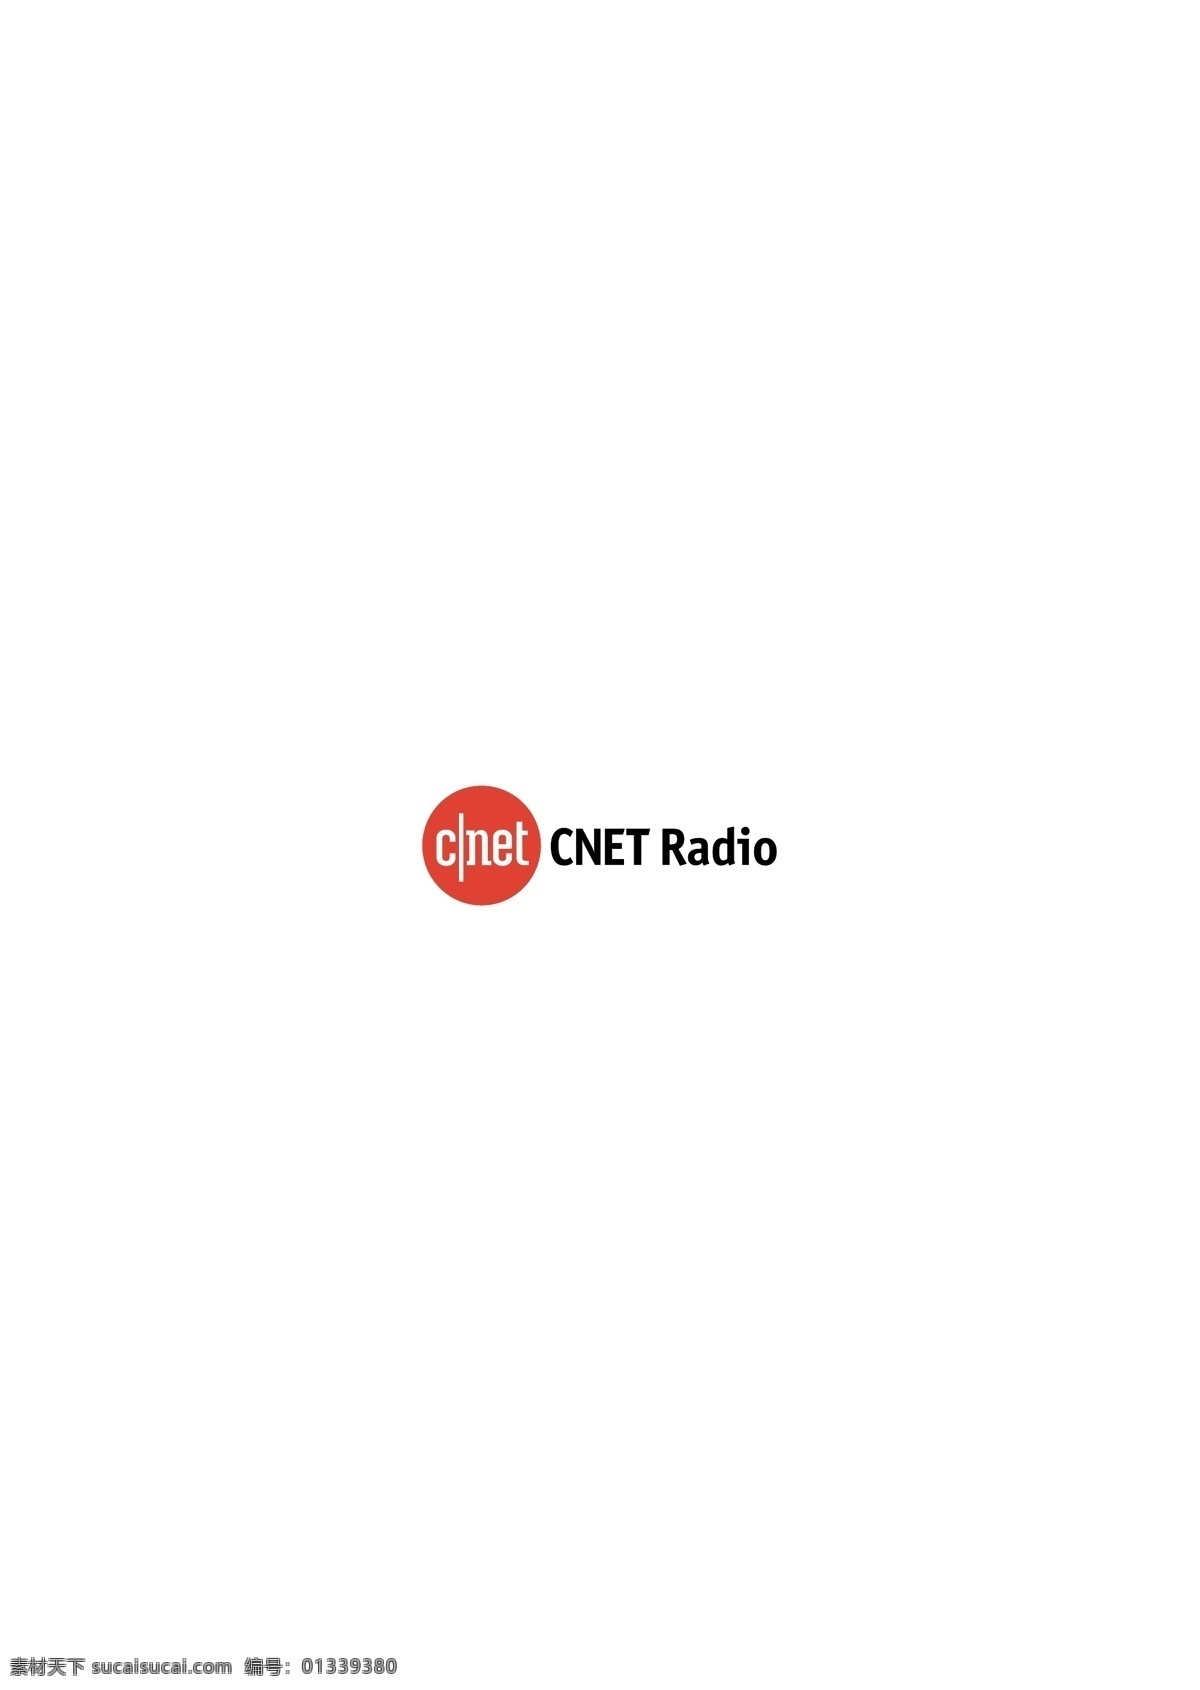 cnet logo大全 logo 设计欣赏 商业矢量 矢量下载 radio 标志设计 欣赏 网页矢量 矢量图 其他矢量图